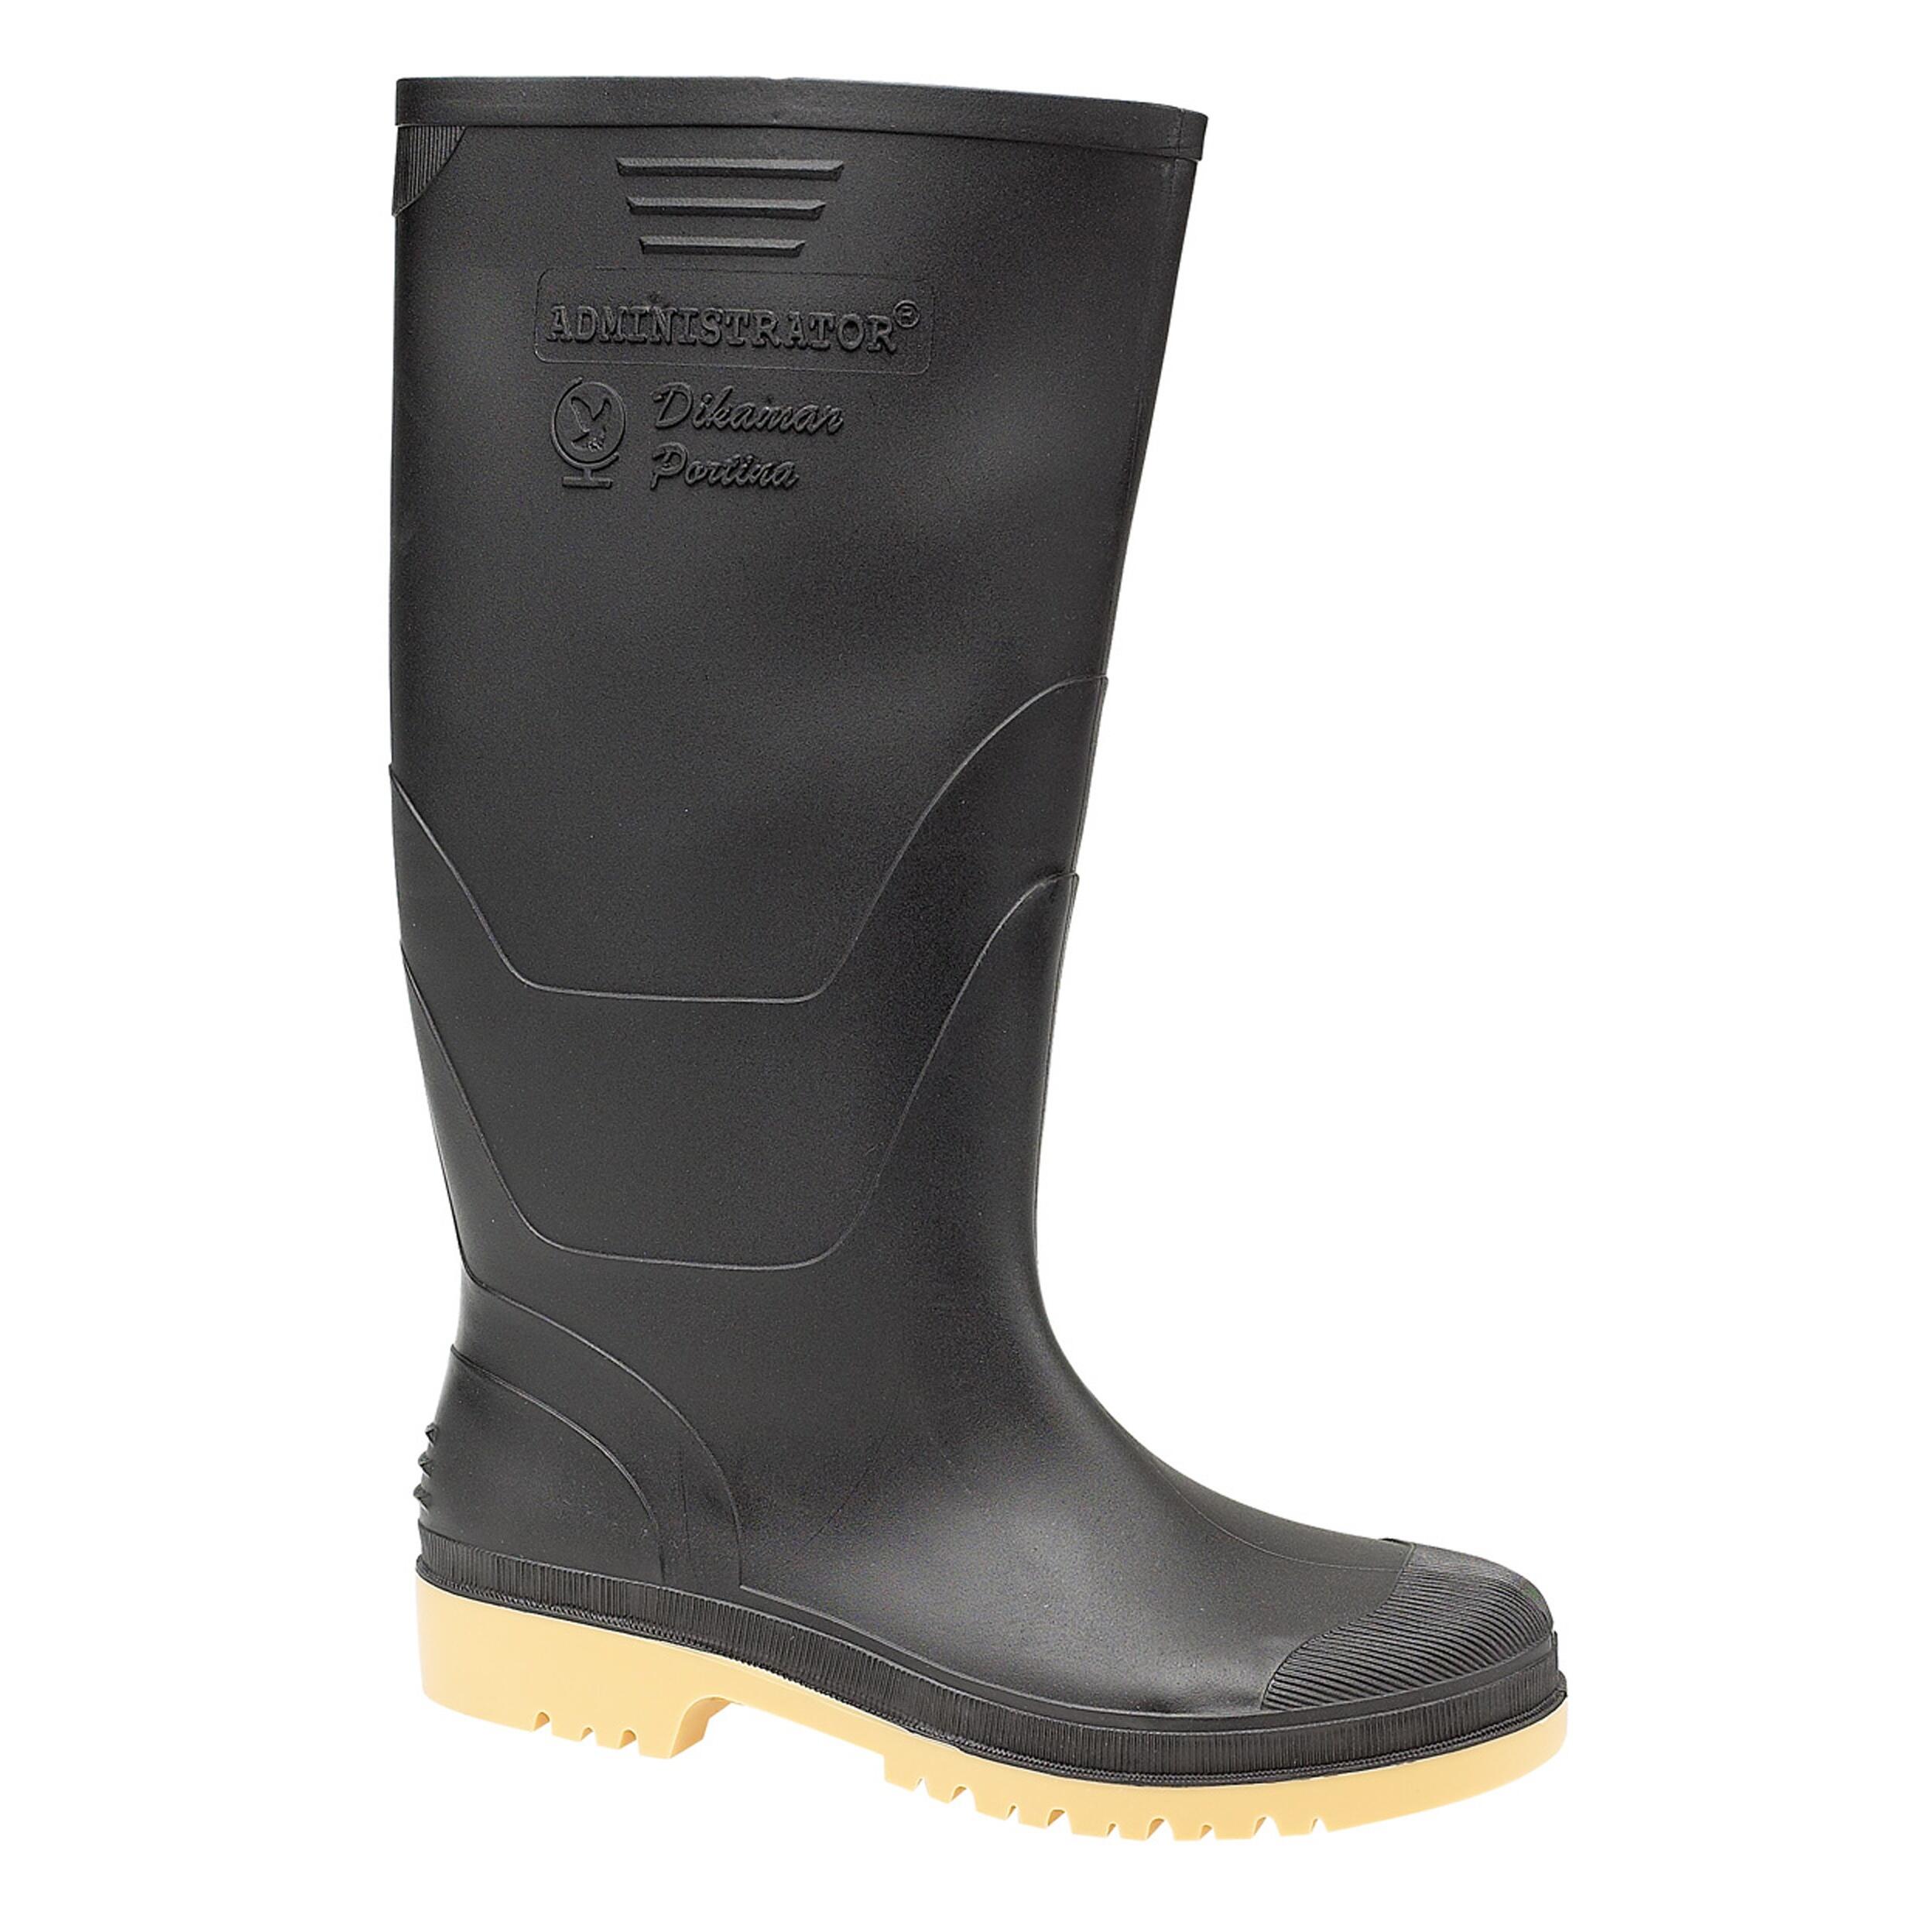 Administrator Wellington / Mens Boots / Plain Rubber Wellingtons (Black) 1/4